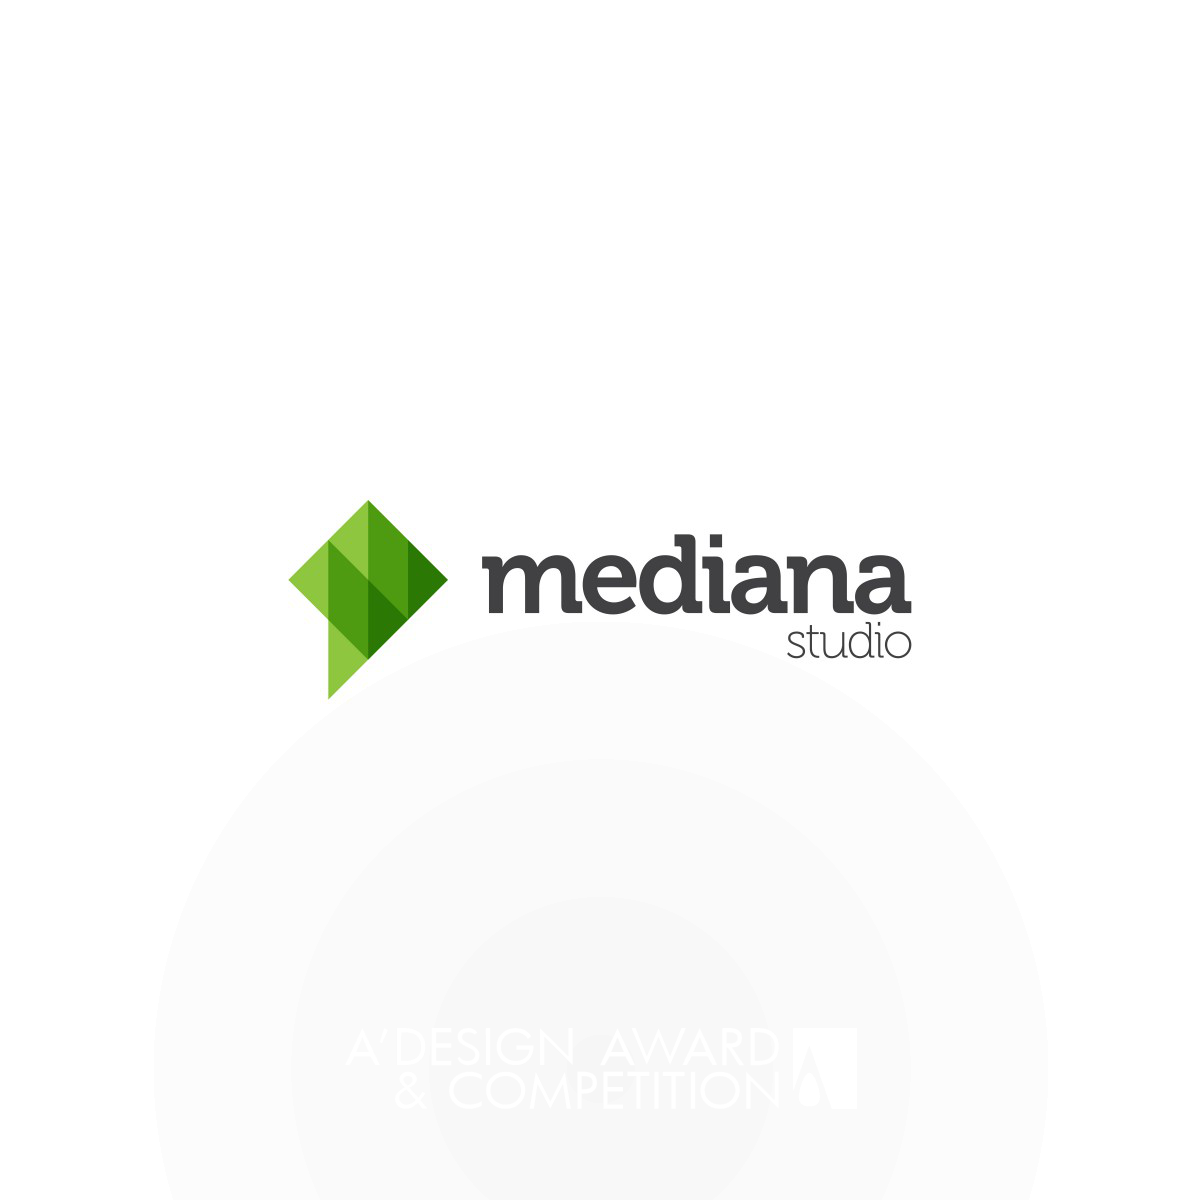 Mediana Studio Brand Identity by Manuel Ruiz